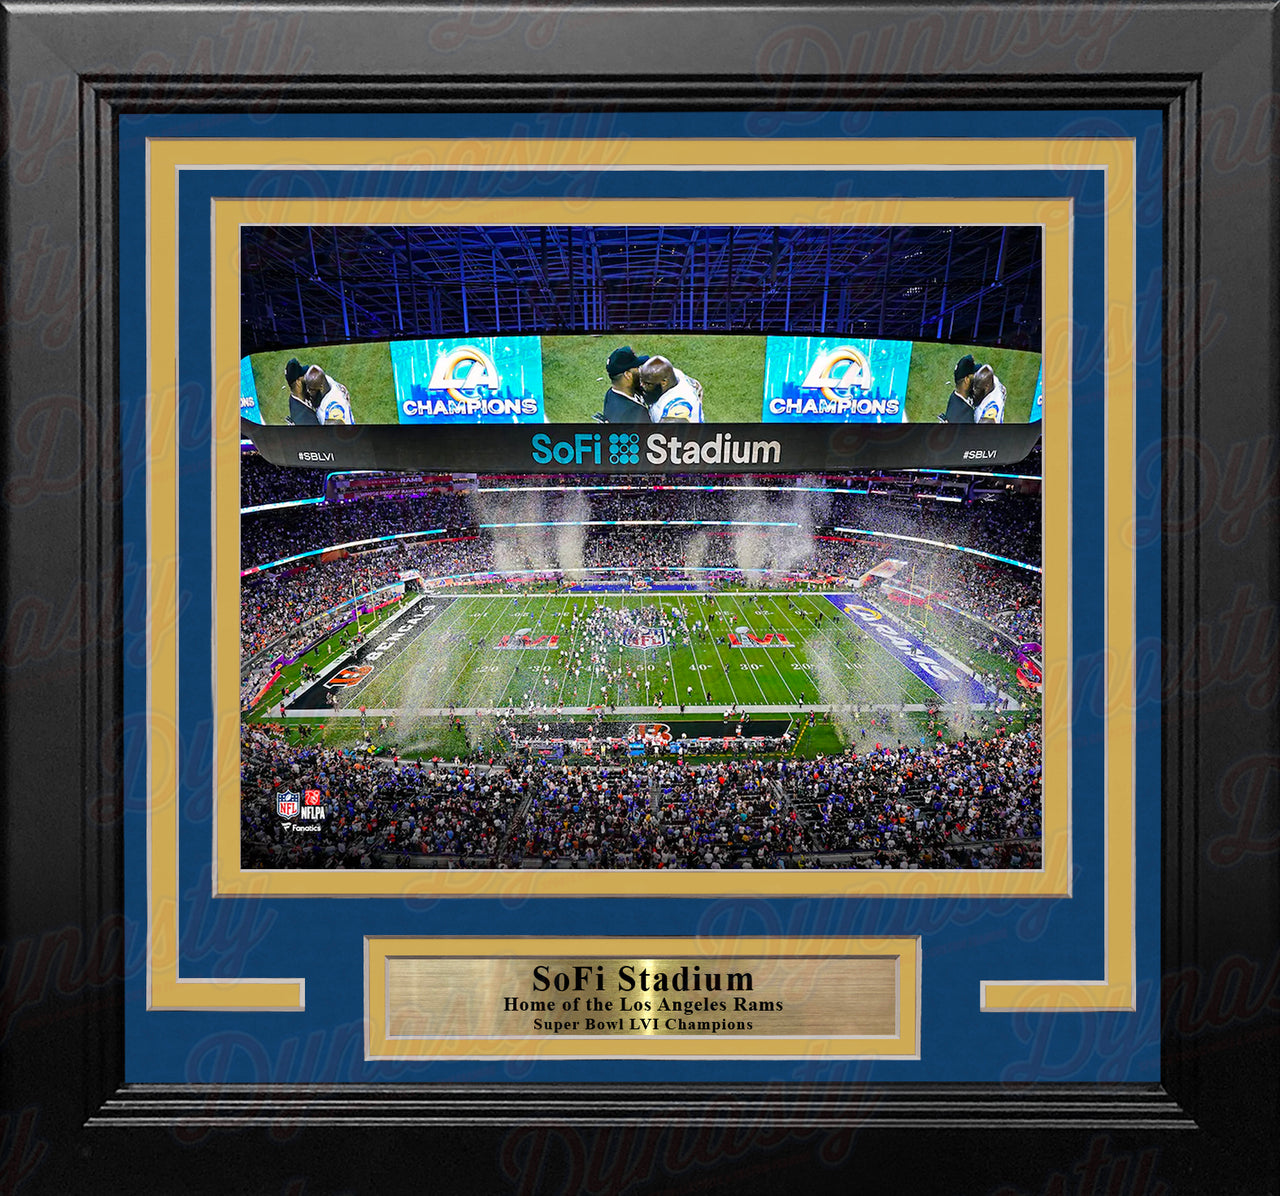 Los Angeles Rams SoFi Stadium Super Bowl LVI Champions 8" x 10" Framed Football Photo - Dynasty Sports & Framing 